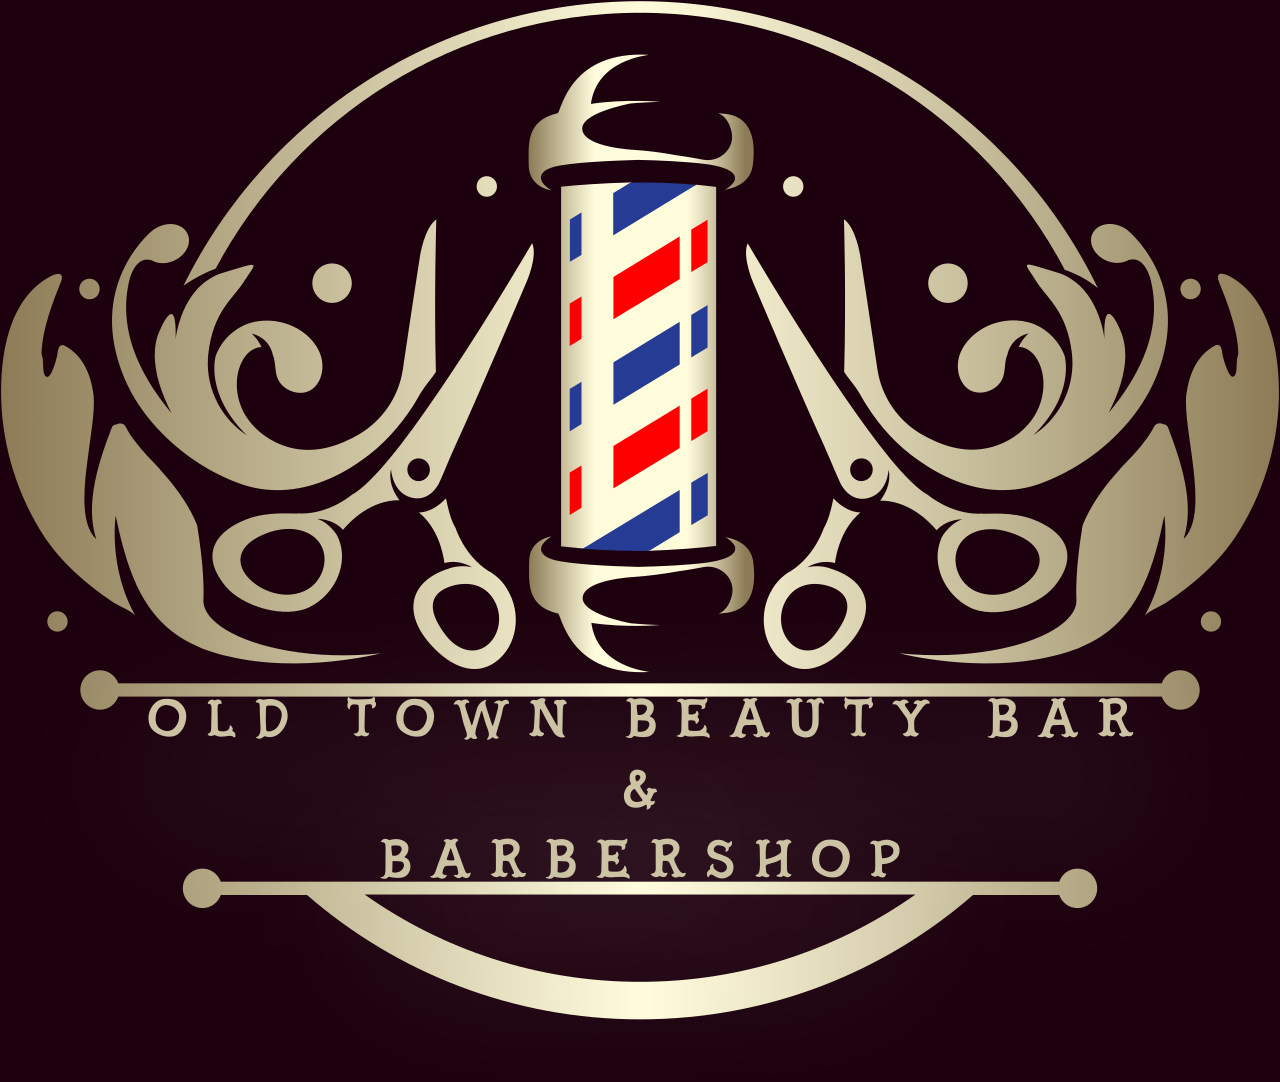 Old Town Beauty Bar
&
Barbershop's logo